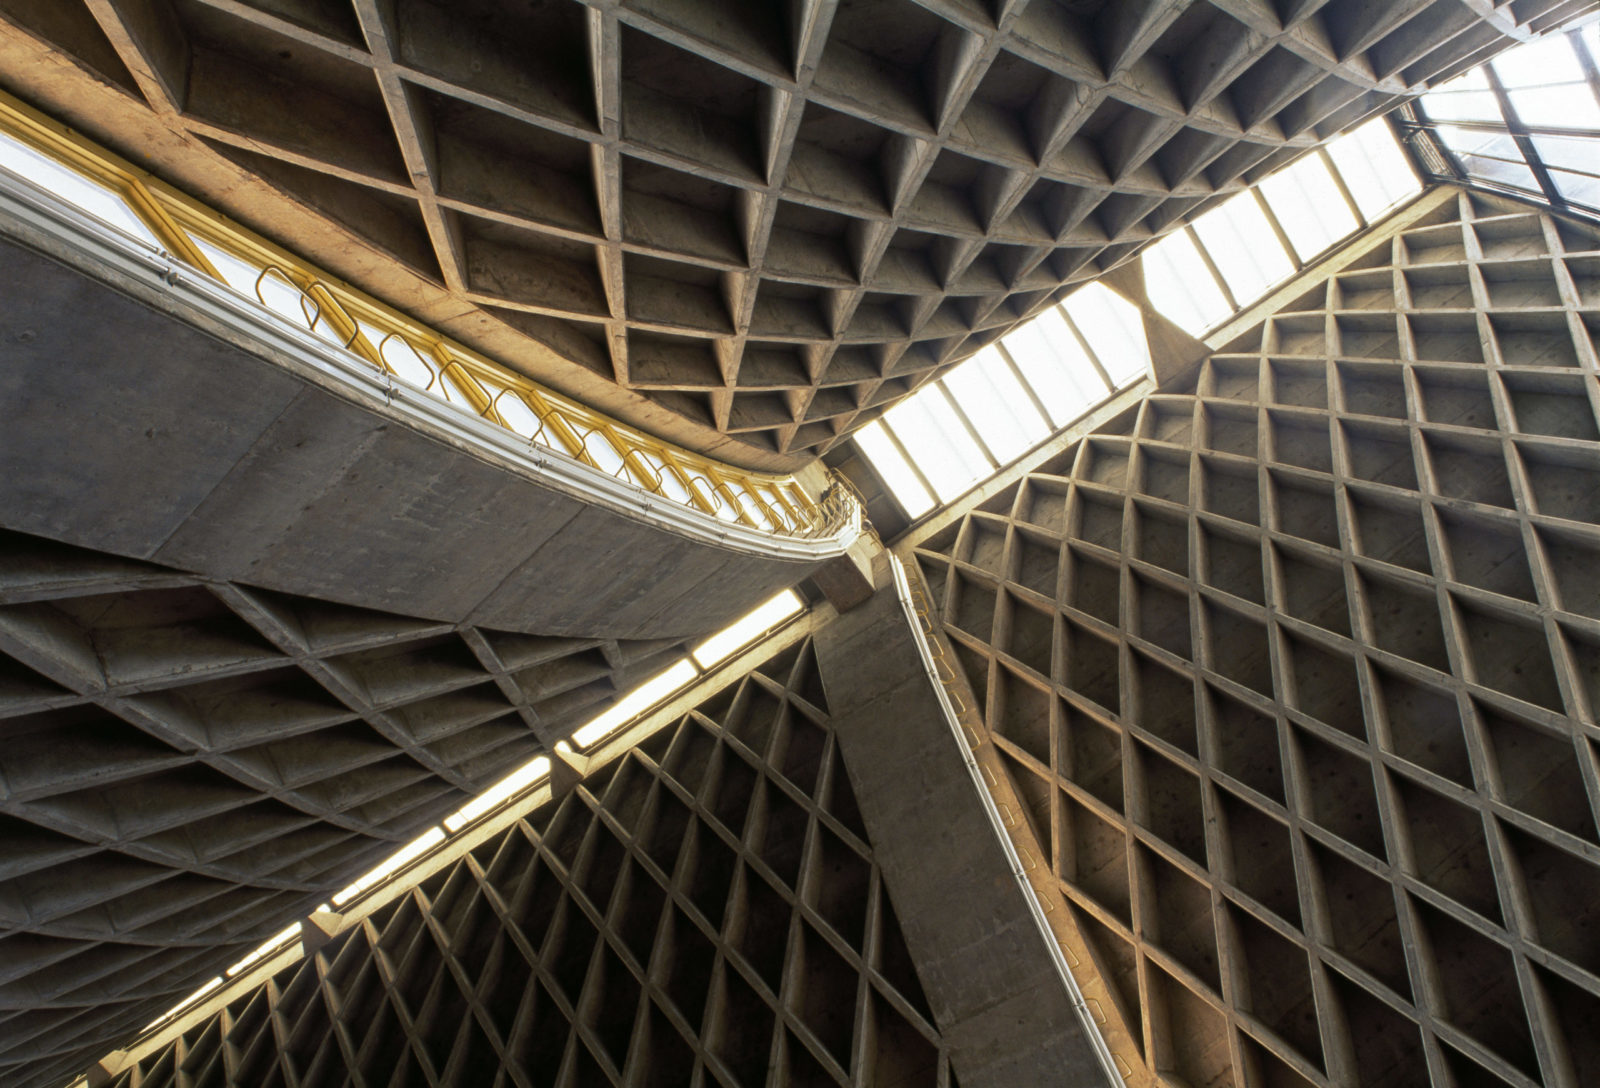 Photograph of geometric sweeping interior of IM Pei's Luce Chapel